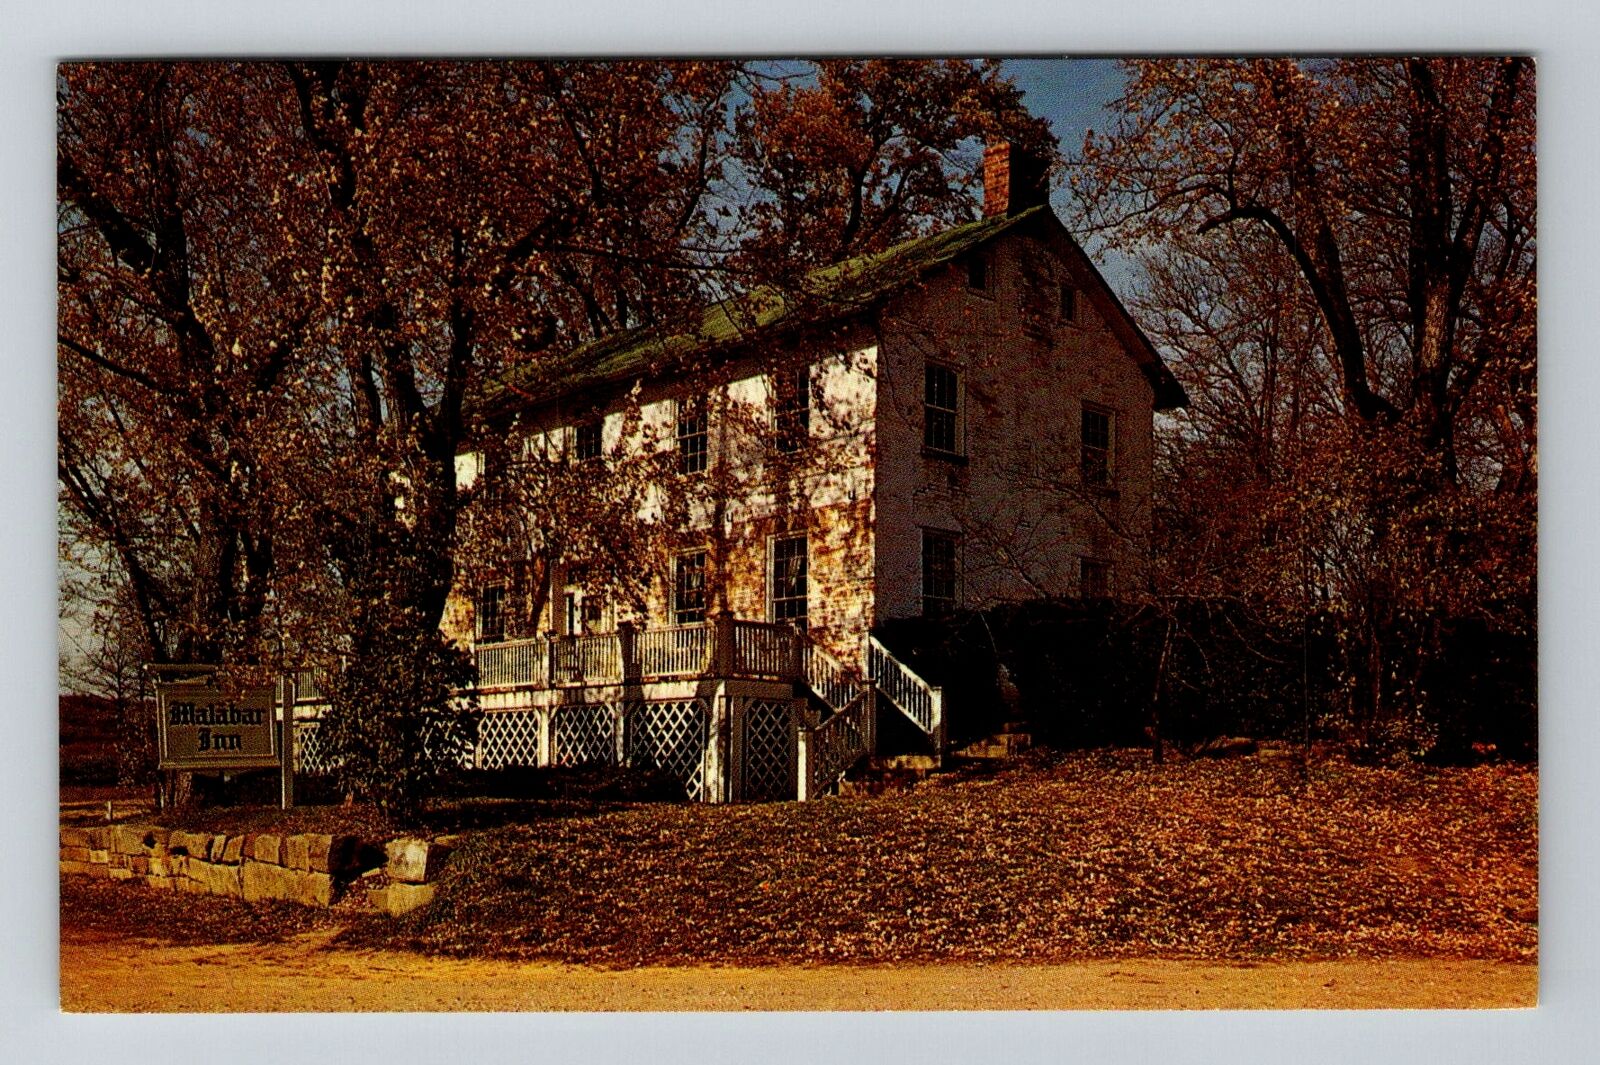 Mansfield OH-Ohio, Malabar Inn on Malabar Farm, Vintage Postcard